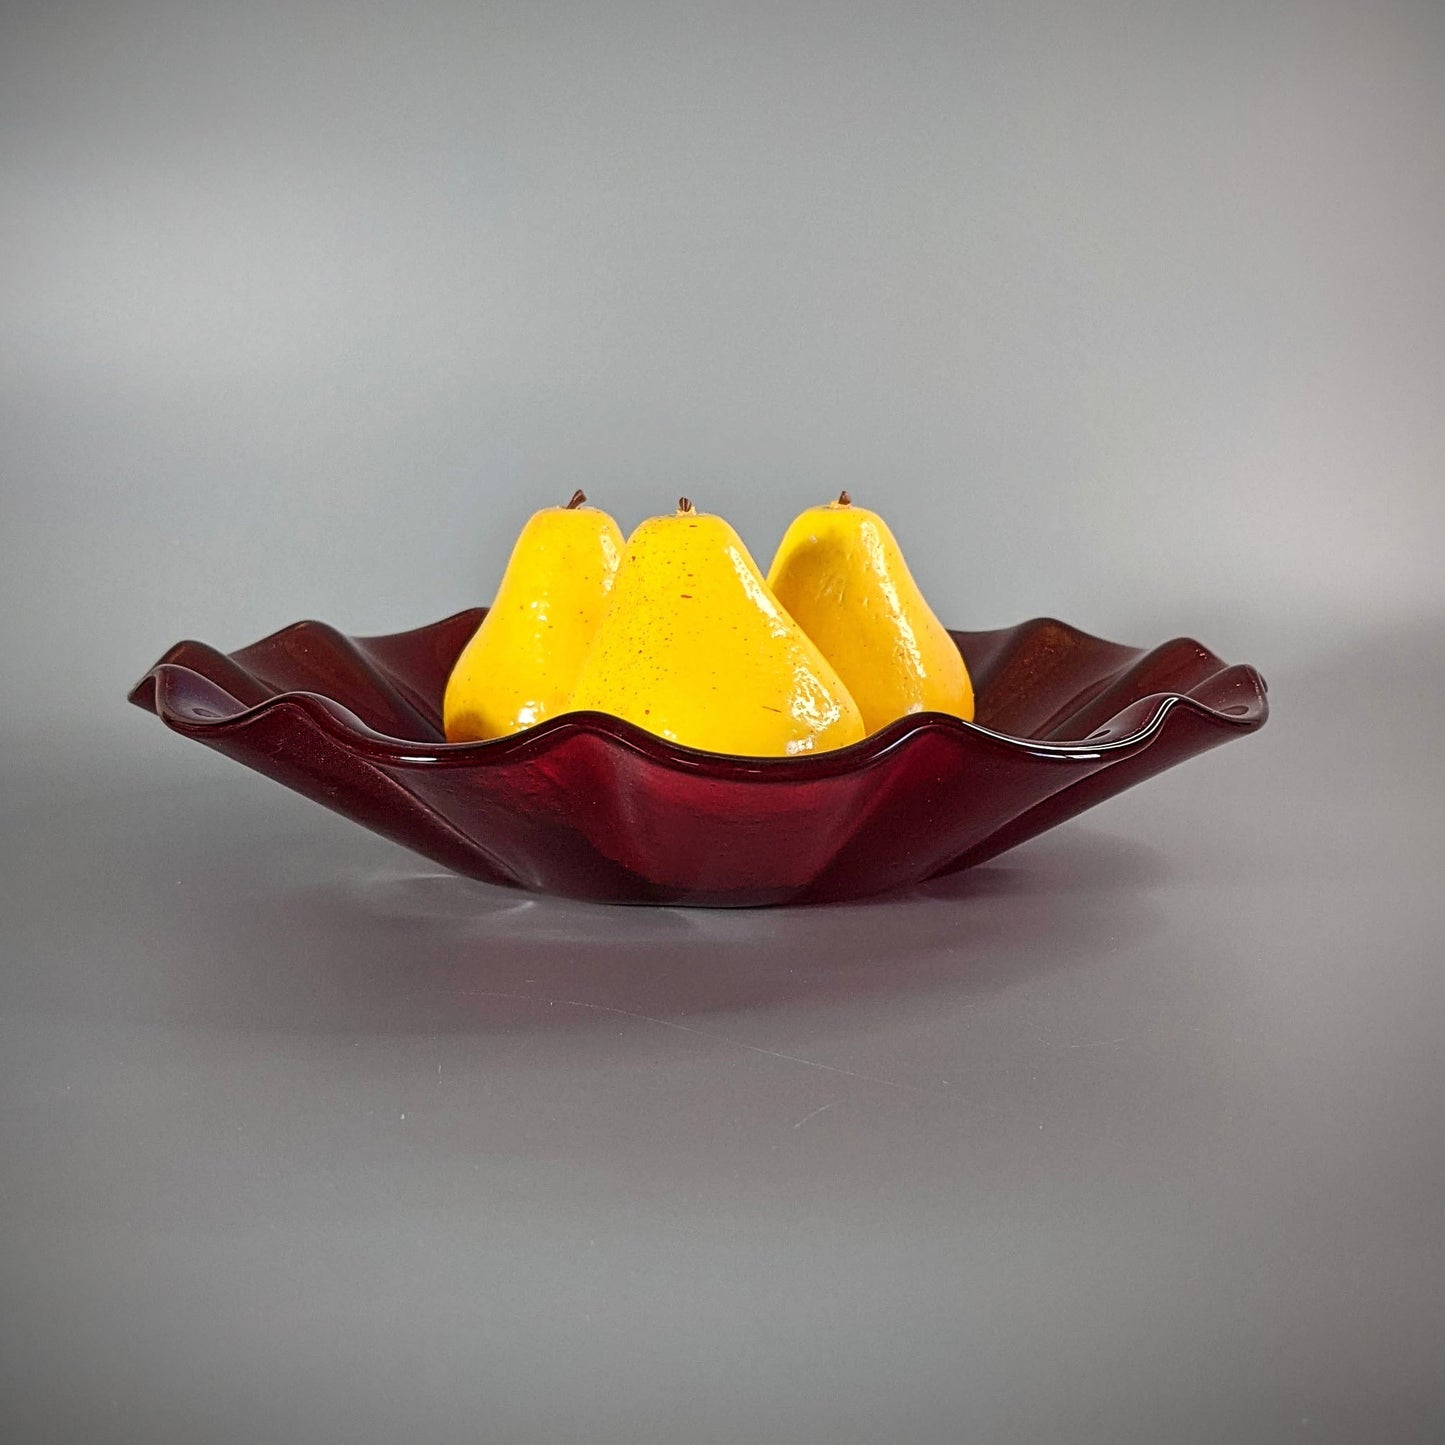 Ruby Red Iridescent Glass Art Fruit Bowl